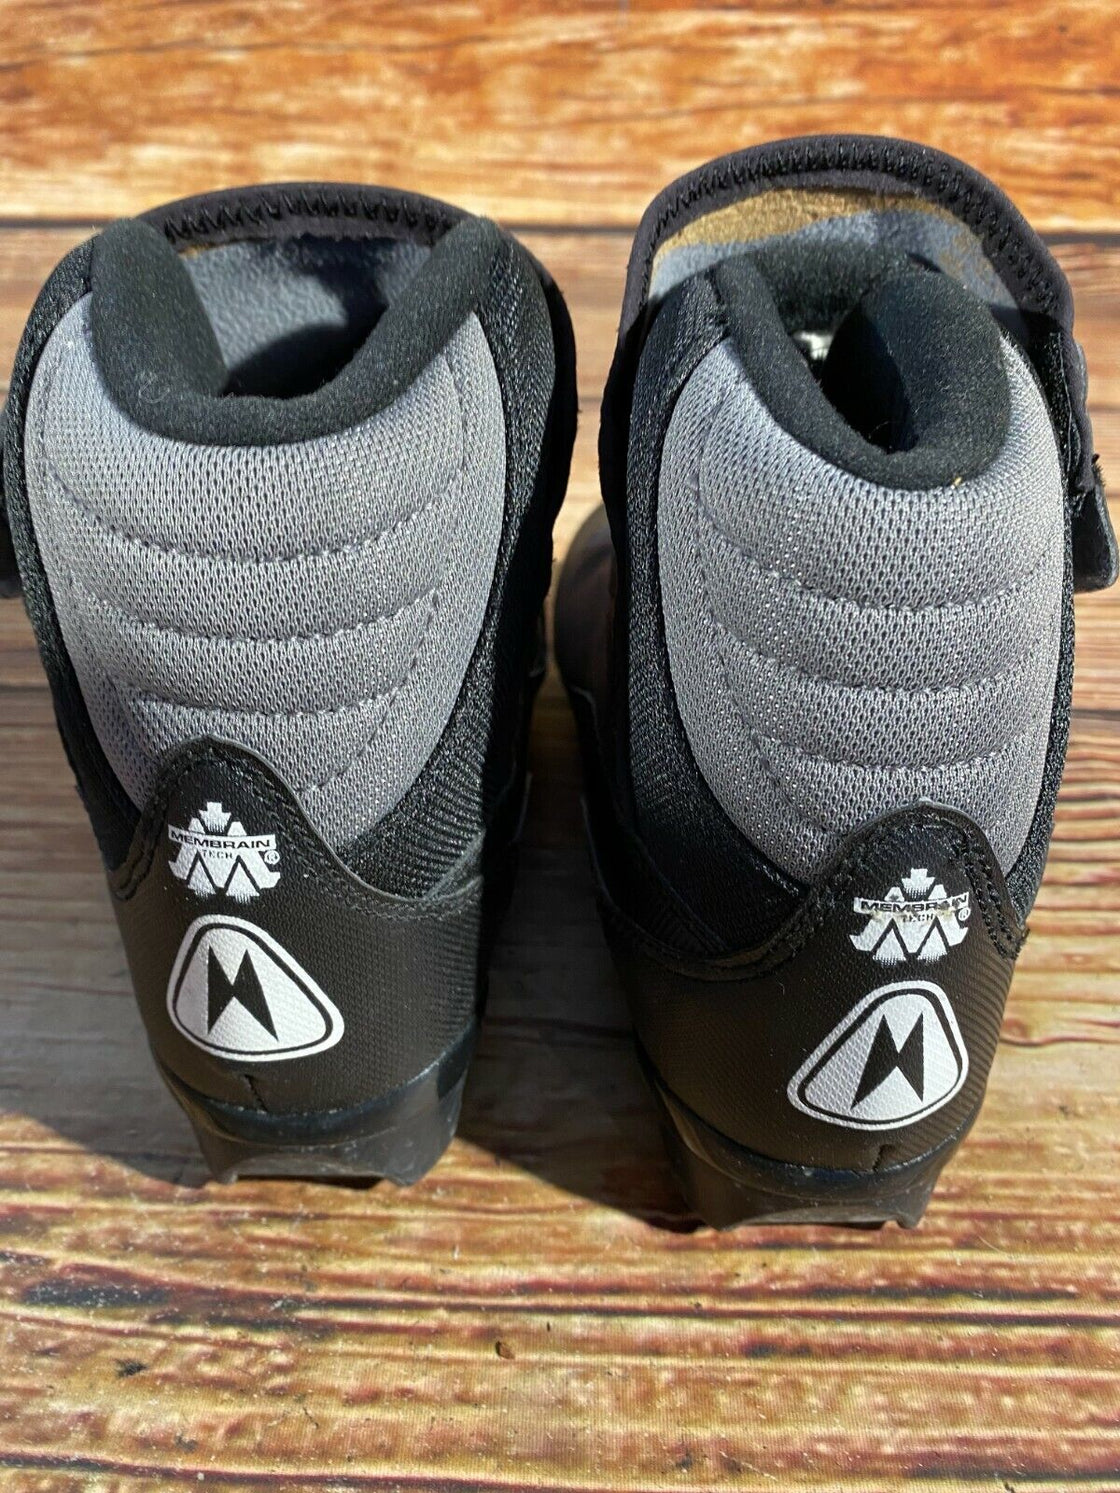 Madshus CT100 Cross Country Ski Boots Size EU39 US6 for NNN